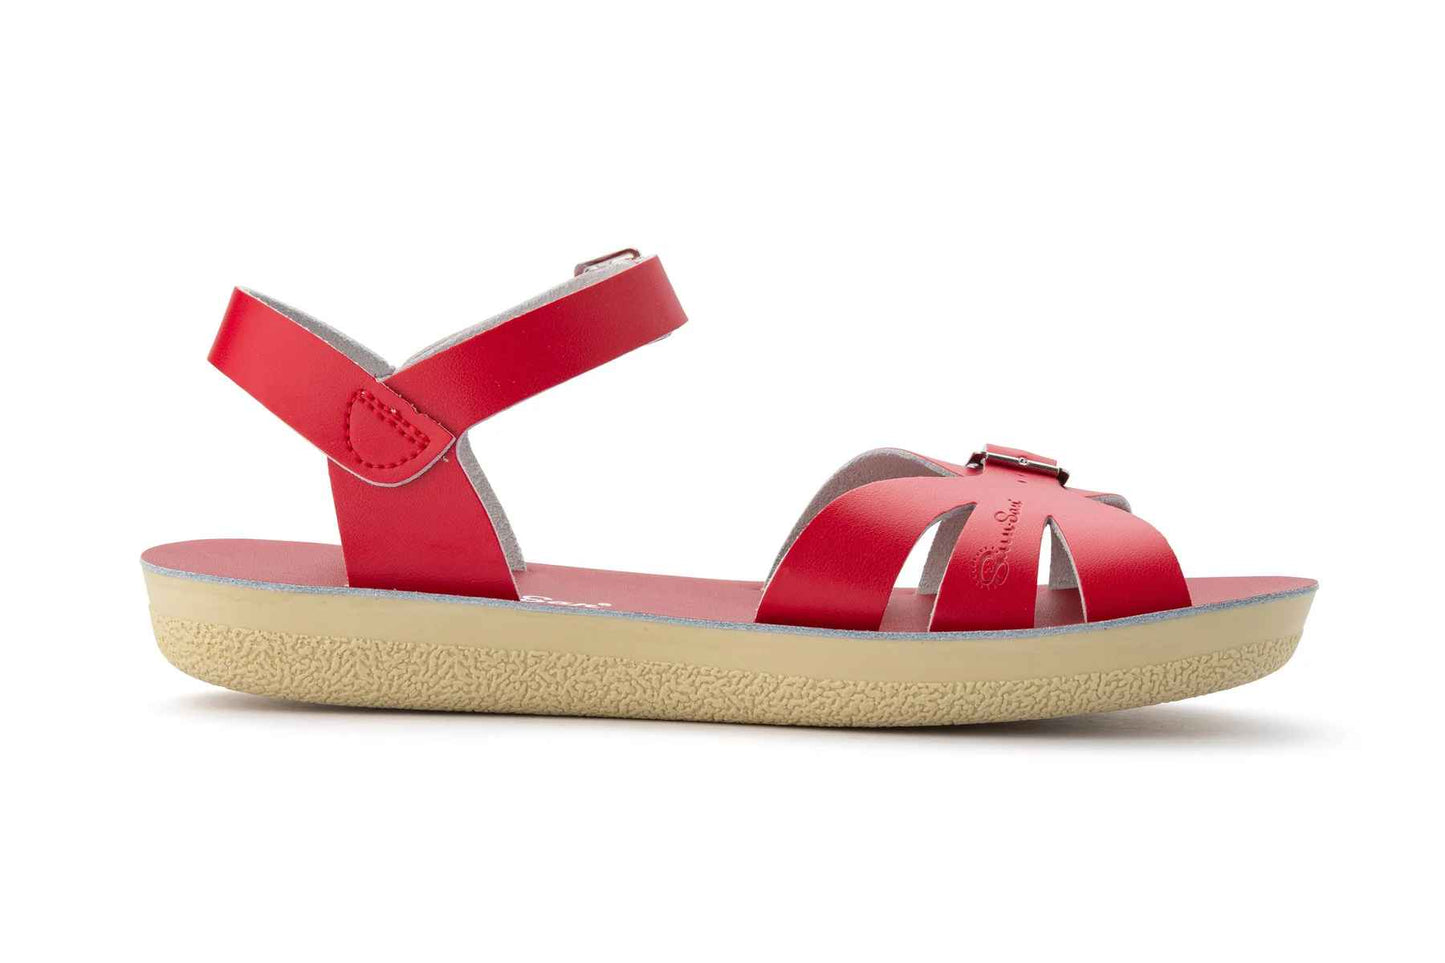 Sun-San "Boardwalk" Sandals - Red